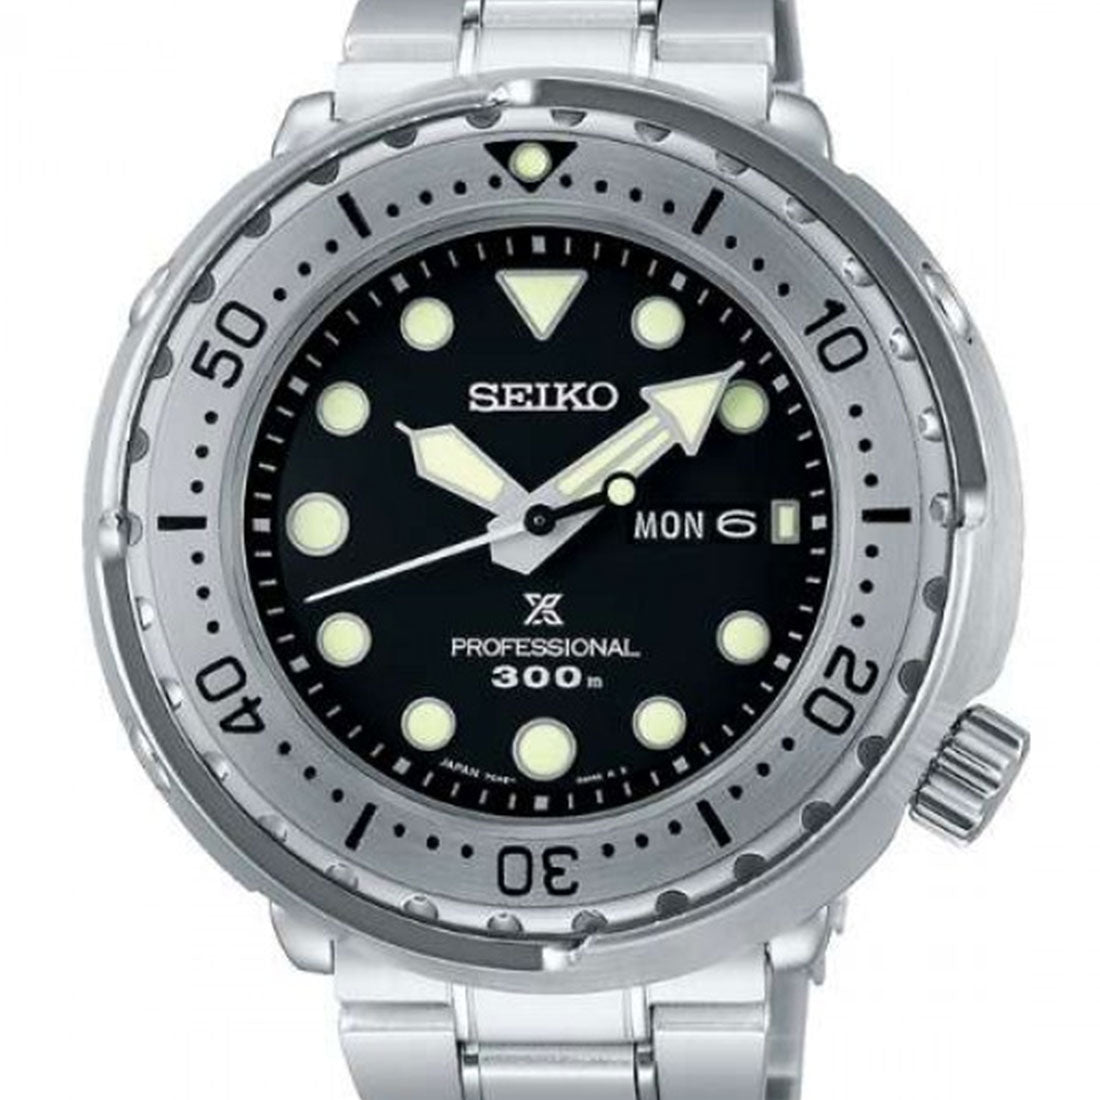 Seiko Prospex JDM Marinemaster SBBN049 Professional Divers Japan Watch -Seiko